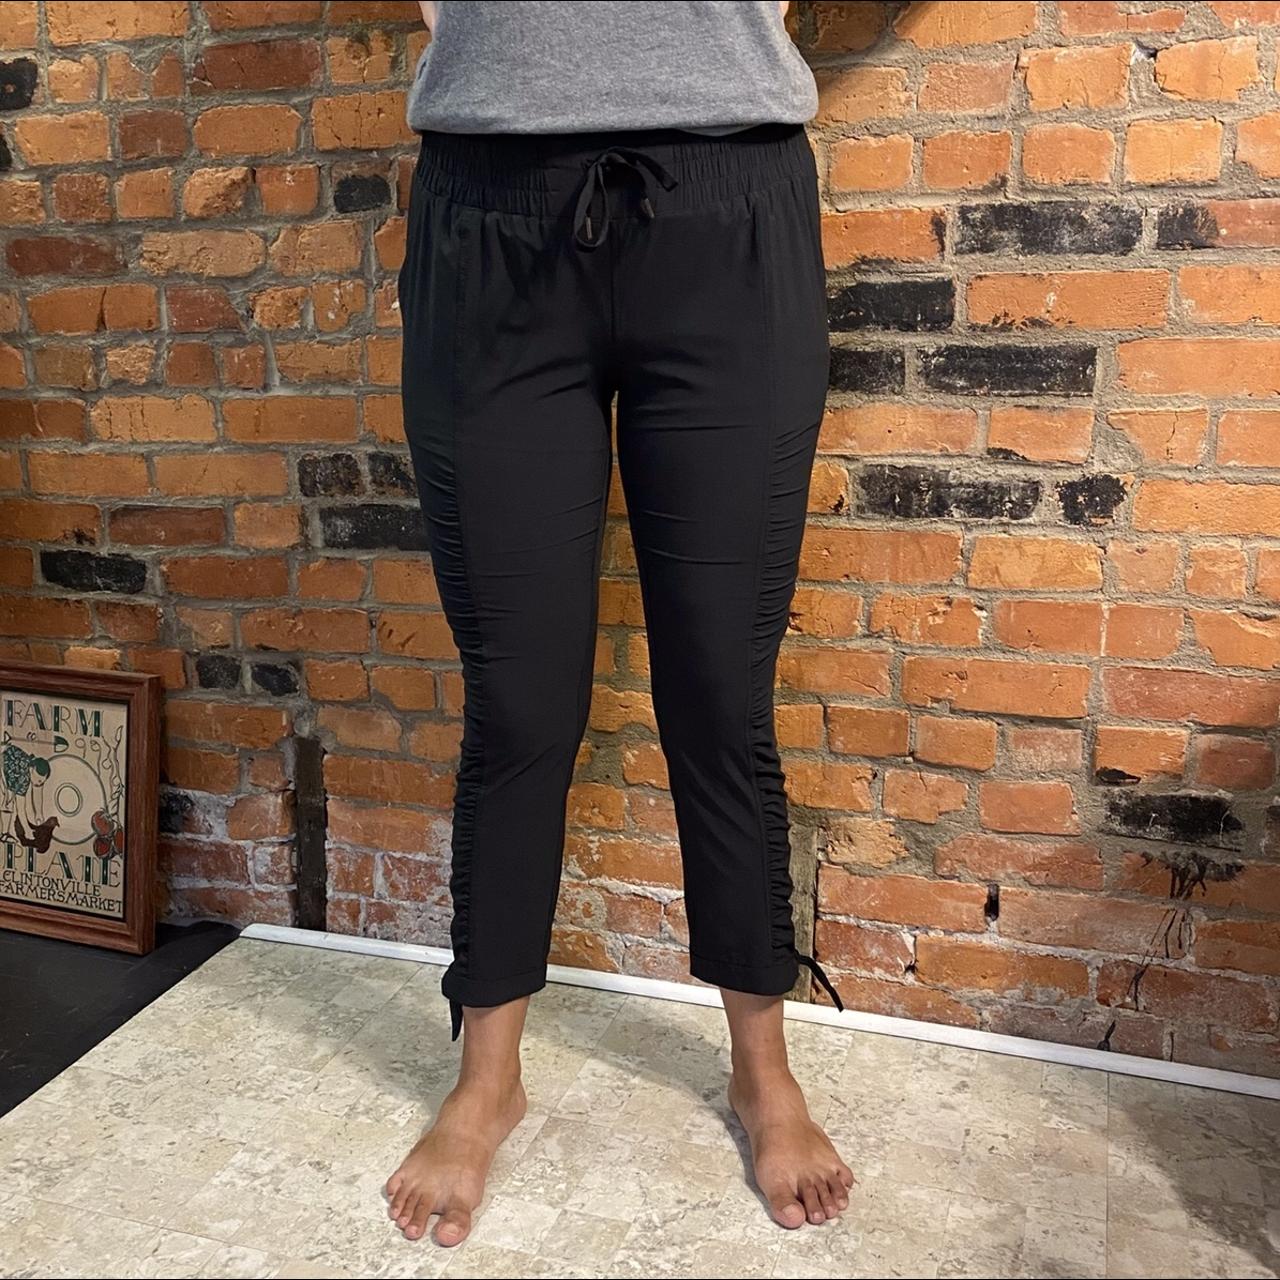 Brown 3/4 Length Yoga Clothing.